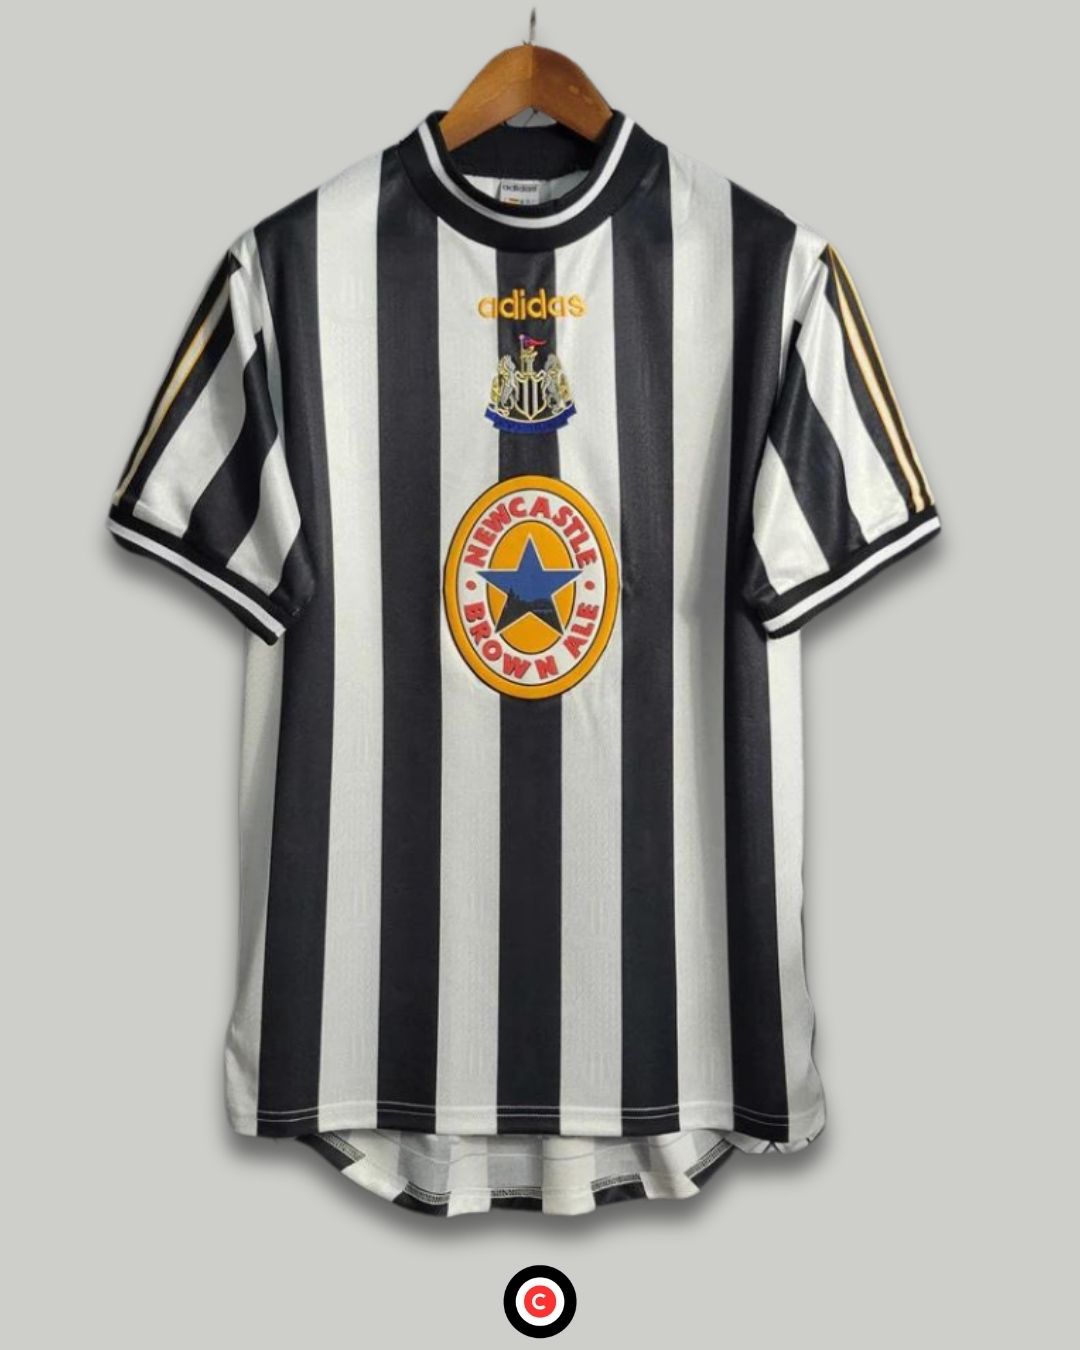 Newcastle United 95/96 (Home Kit) - Premium  from CatenaccioDesigns - Just €60.99! Shop now at CatenaccioDesigns